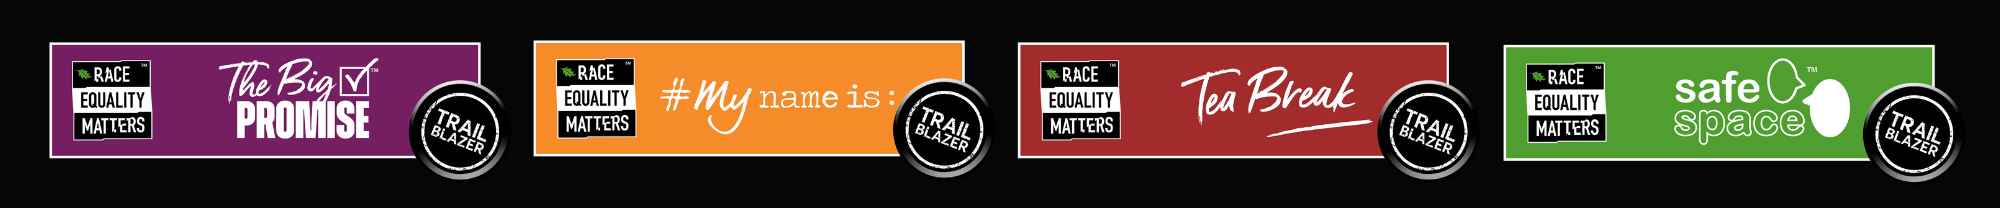 4x Trailblazer solution logos on black background